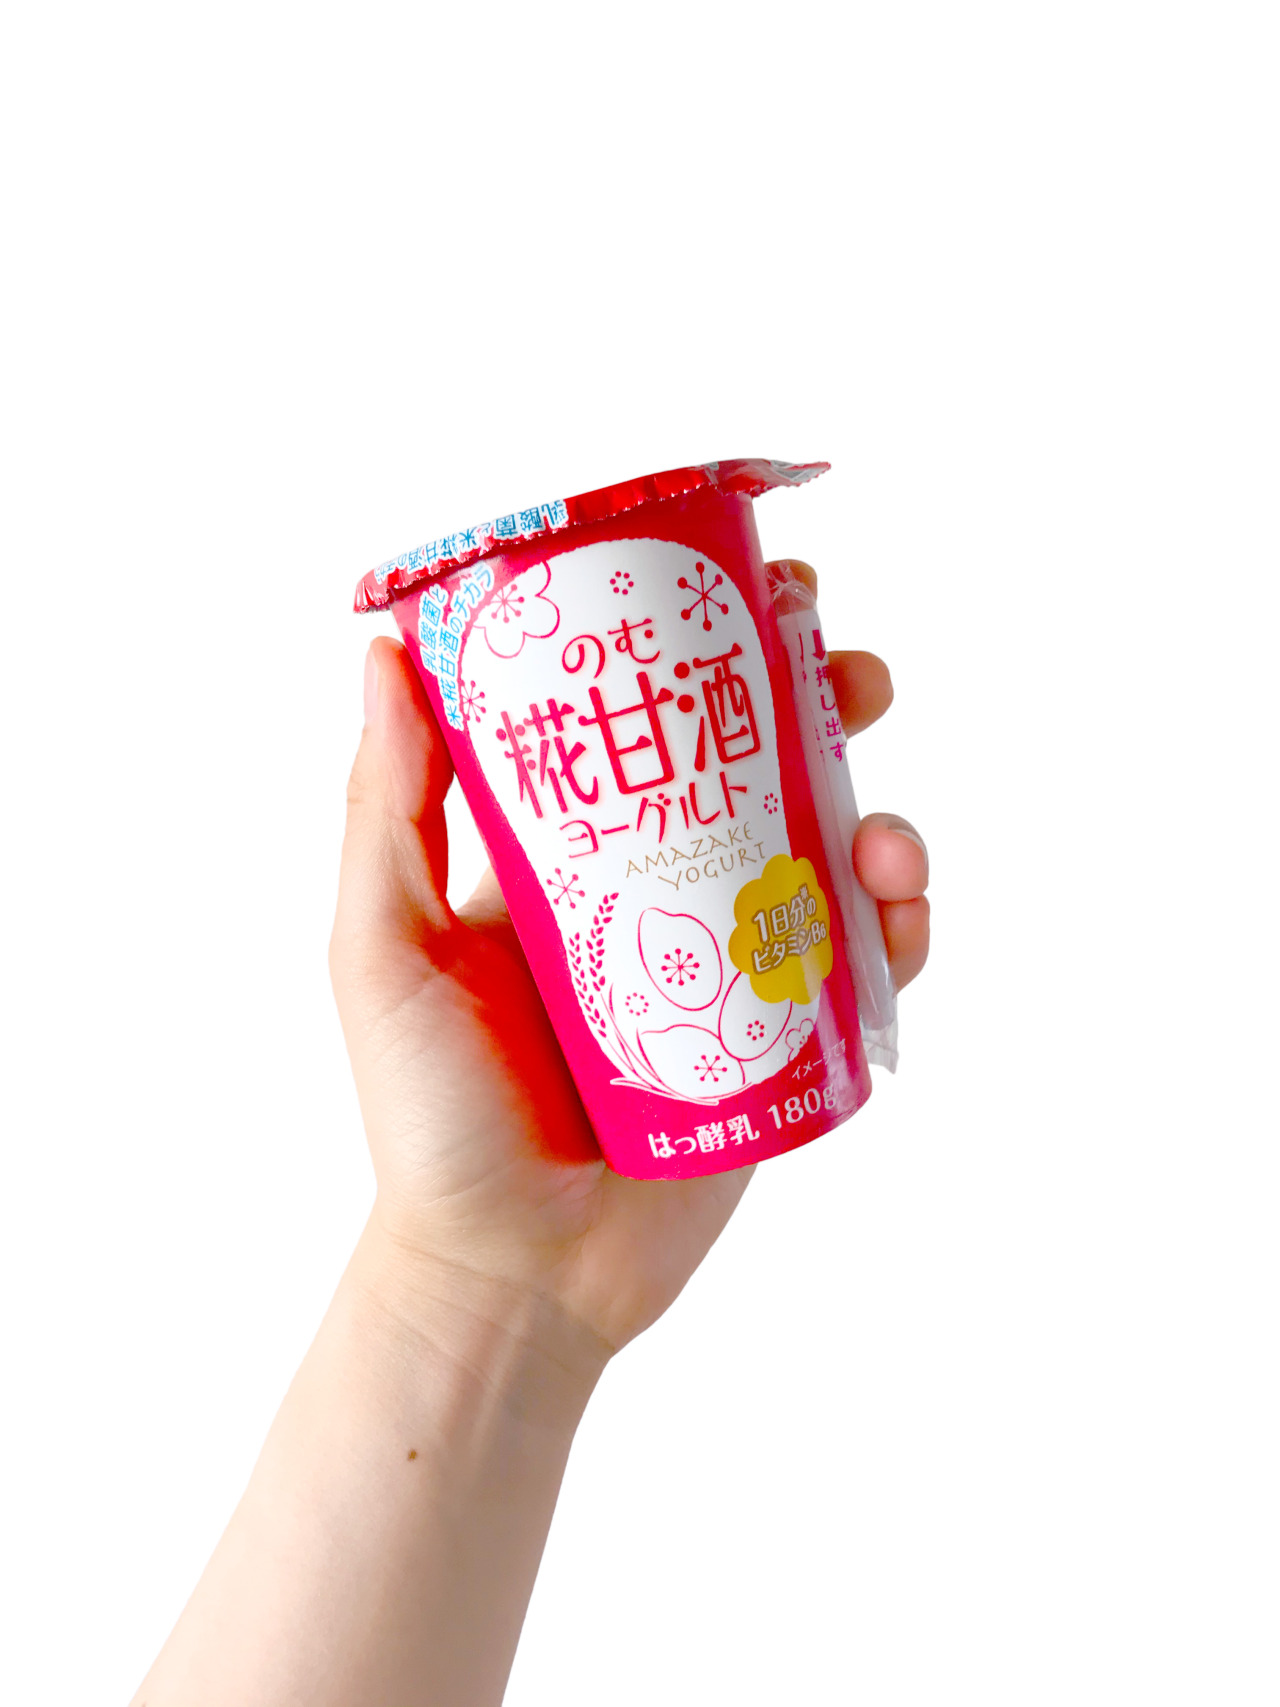 Yoghurt のむ糀甘酒ヨーグルト 日本ルナさん製造の おそらくセブンイレブン限定の商品